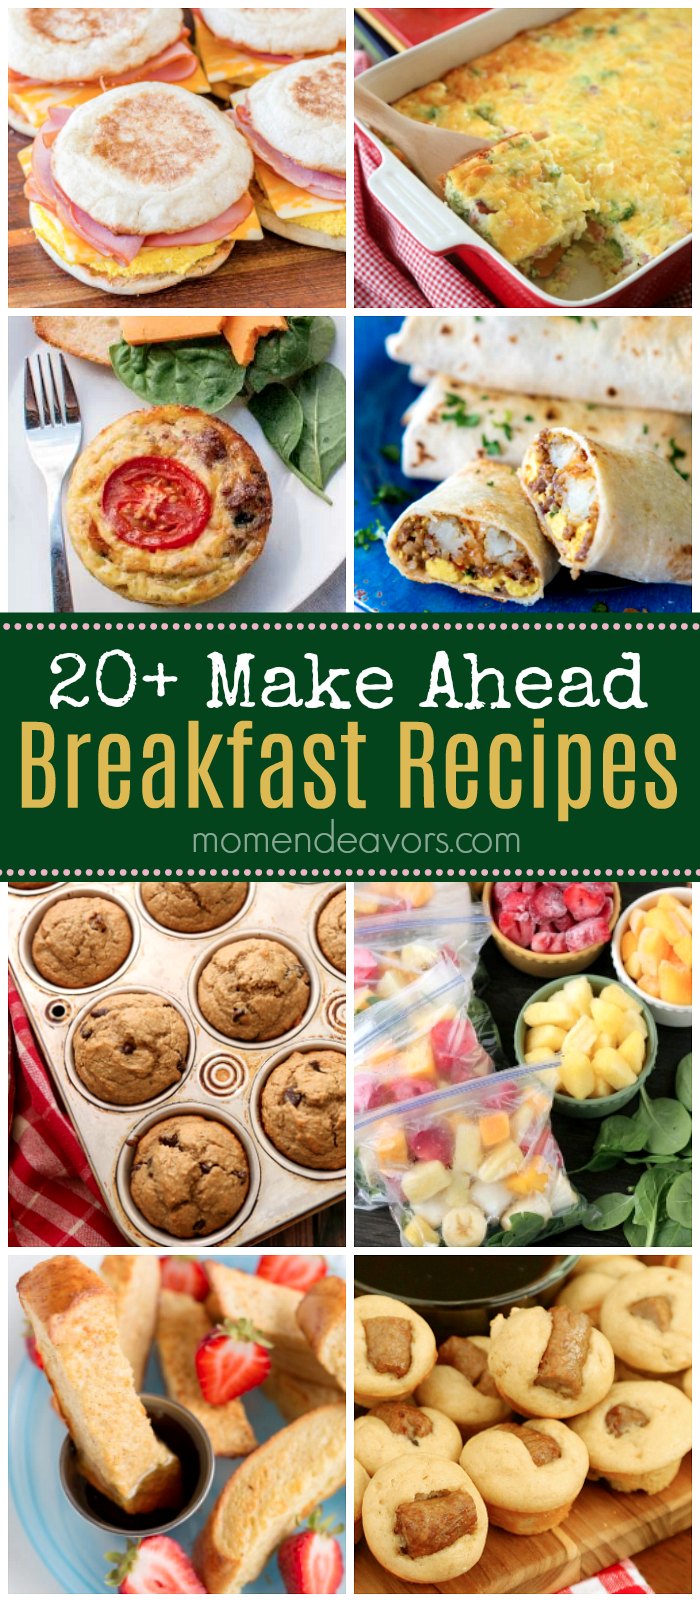 Make Ahead Breakfast Recipes